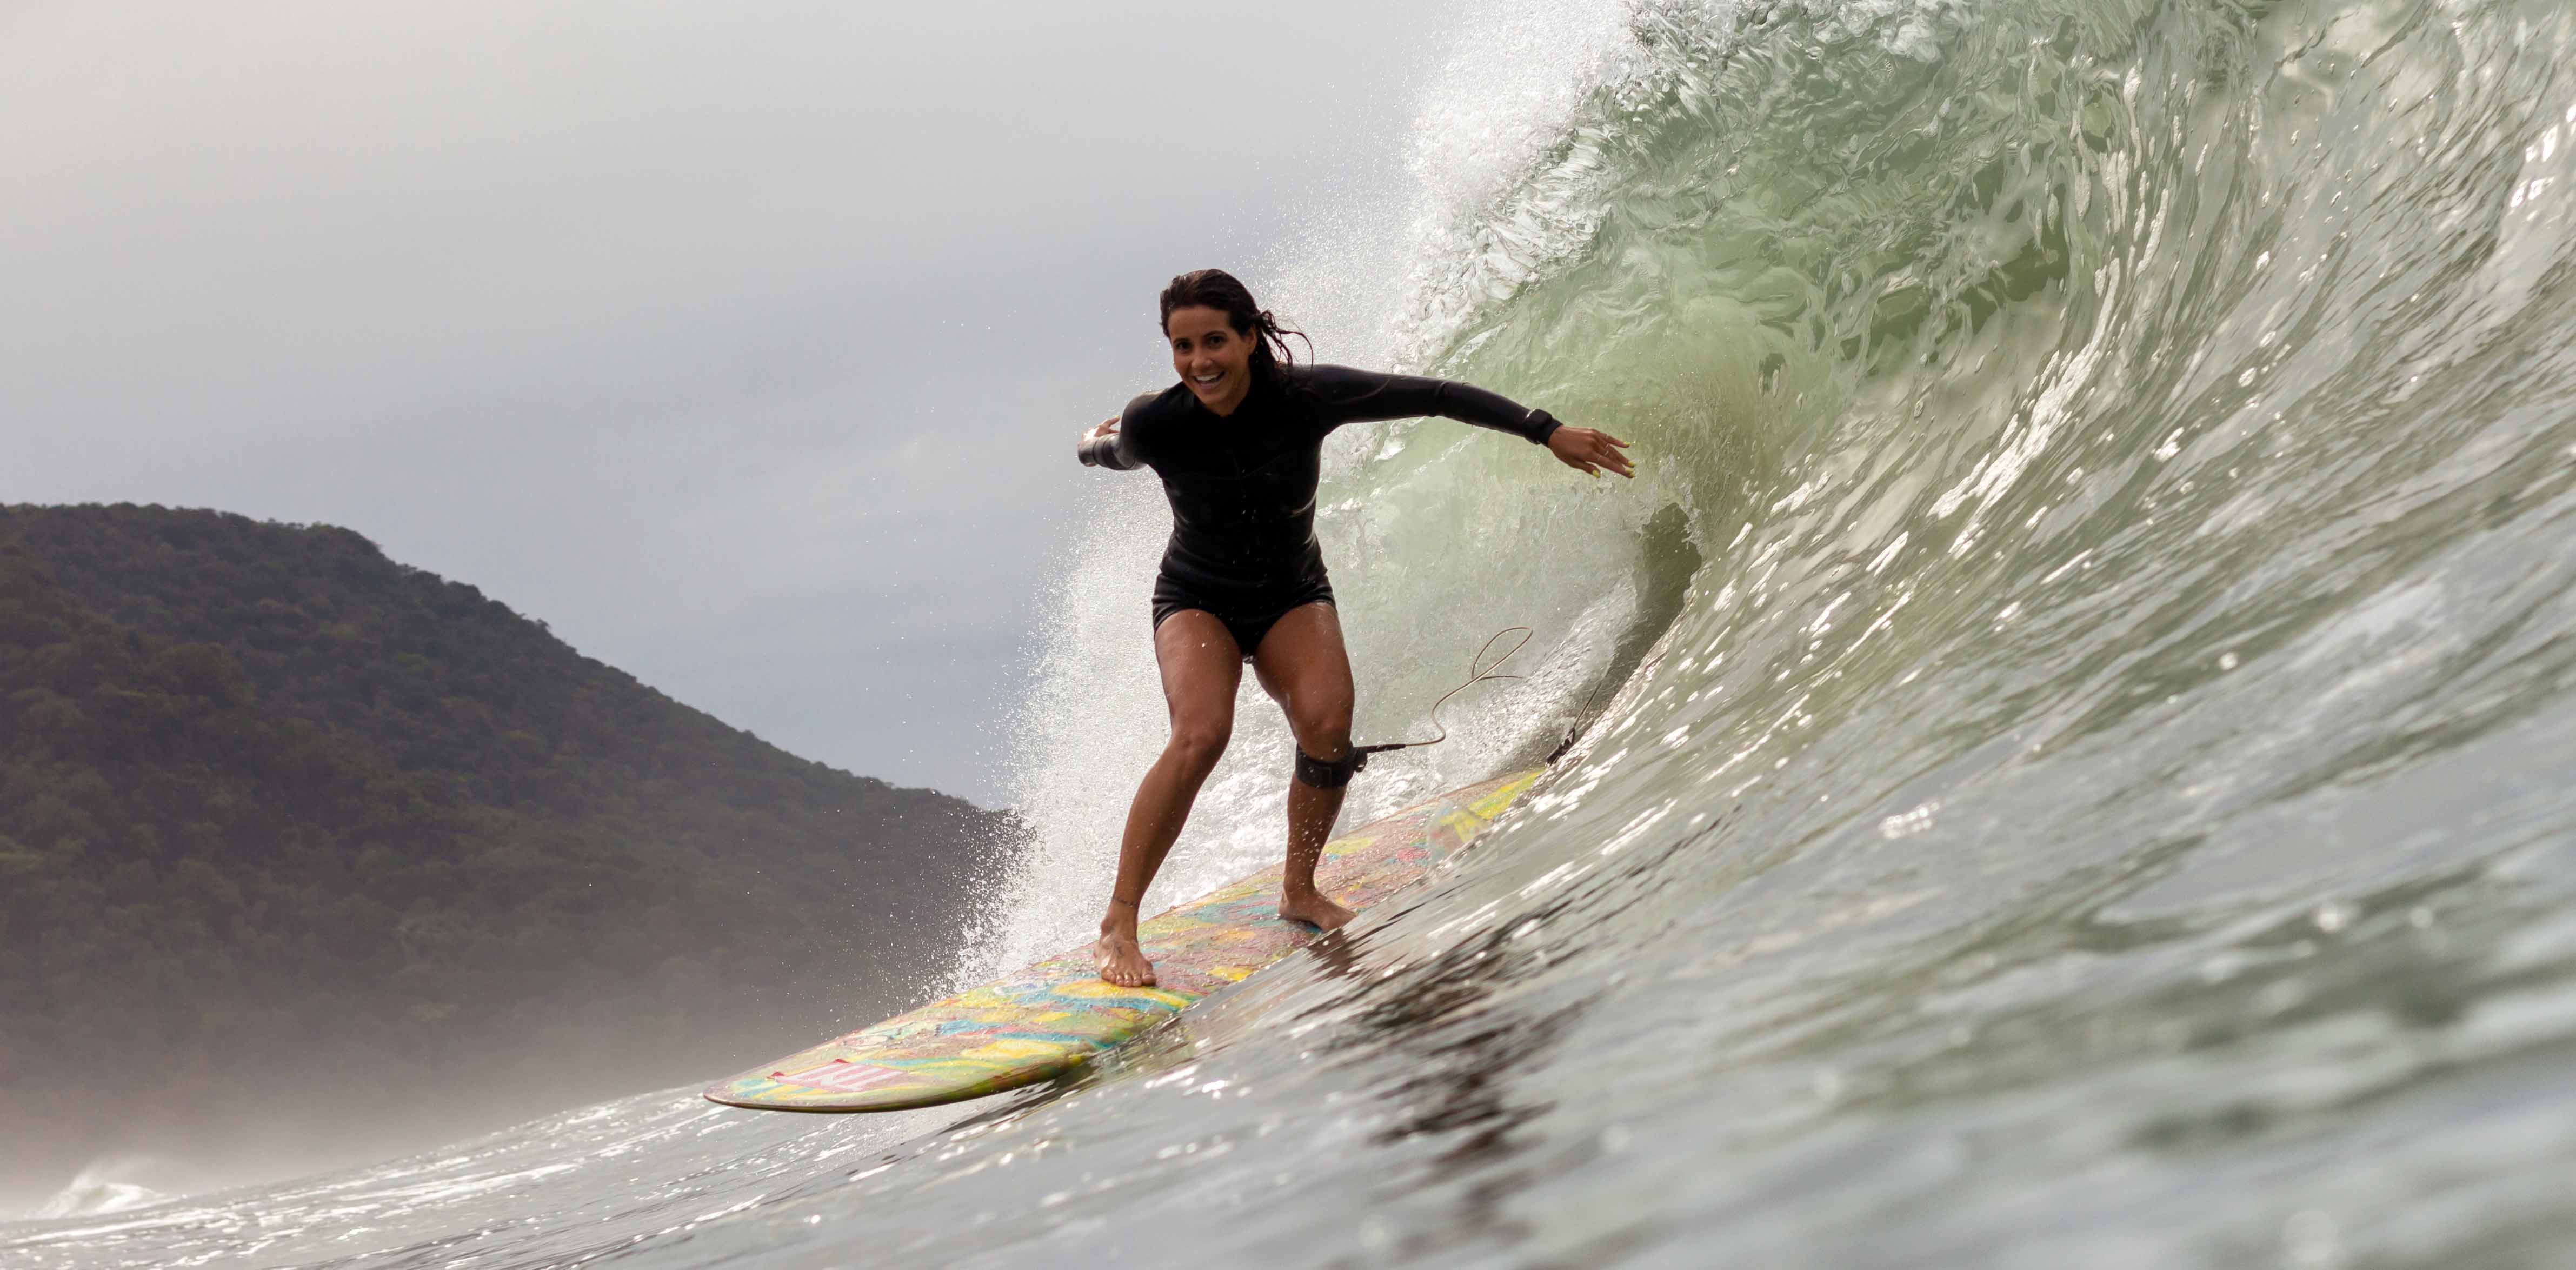 ‘Reaprendi o sentido do surfe’, diz Chloé Calmon sobre nova rotina